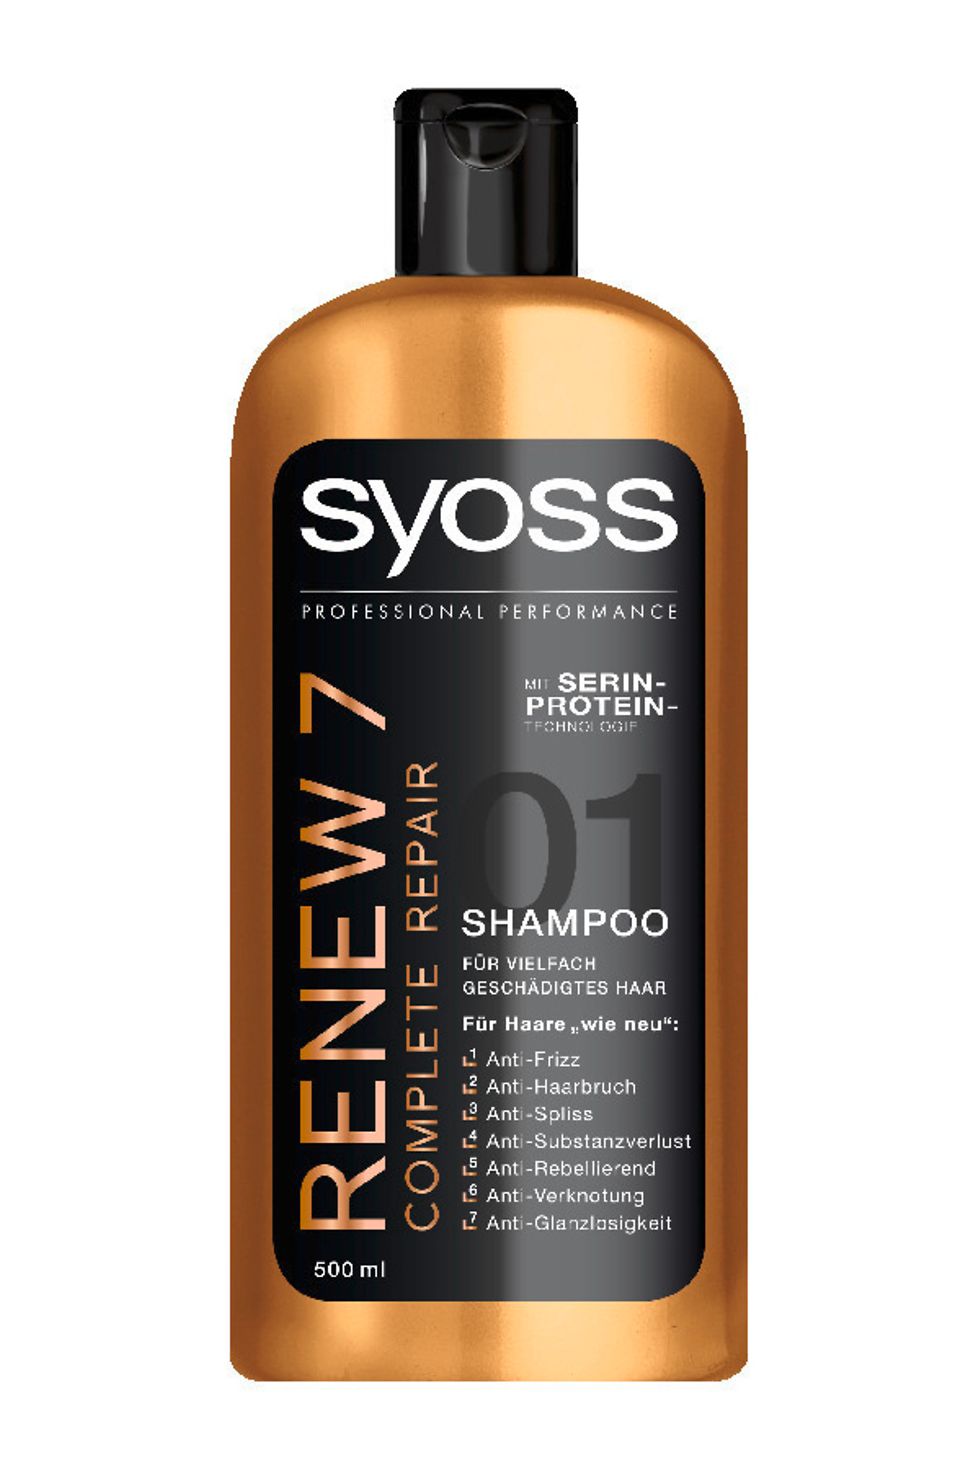 Syoss Shampoo Renew 7